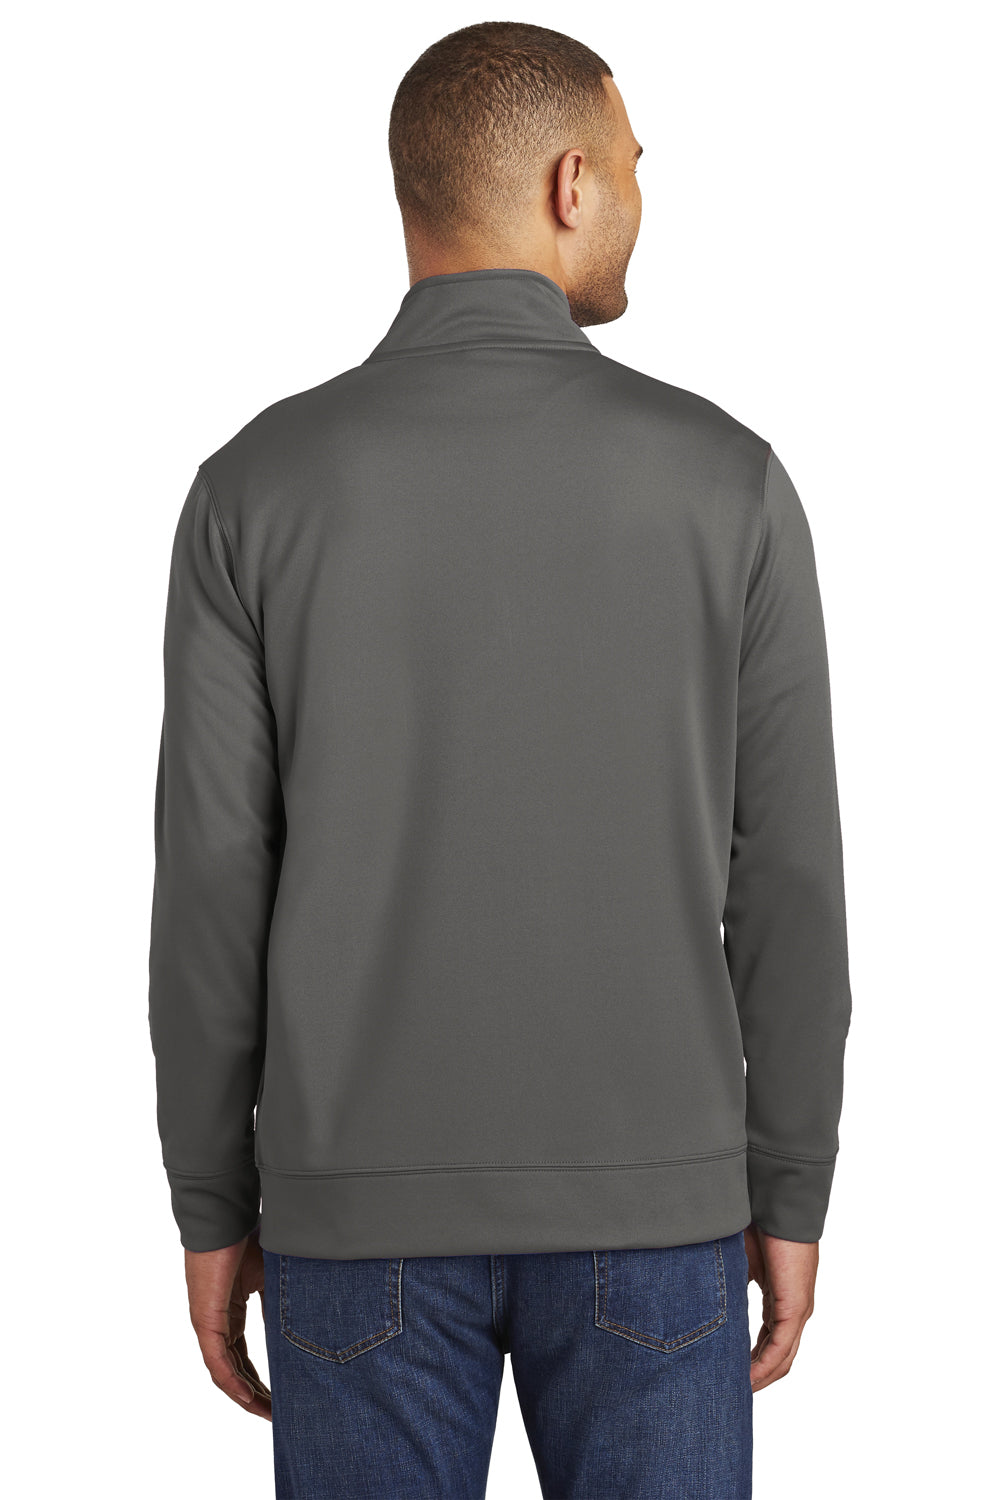 Port & Company PC590Q Mens Dry Zone Performance Moisture Wicking Fleece 1/4 Zip Sweatshirt Charcoal Grey Back